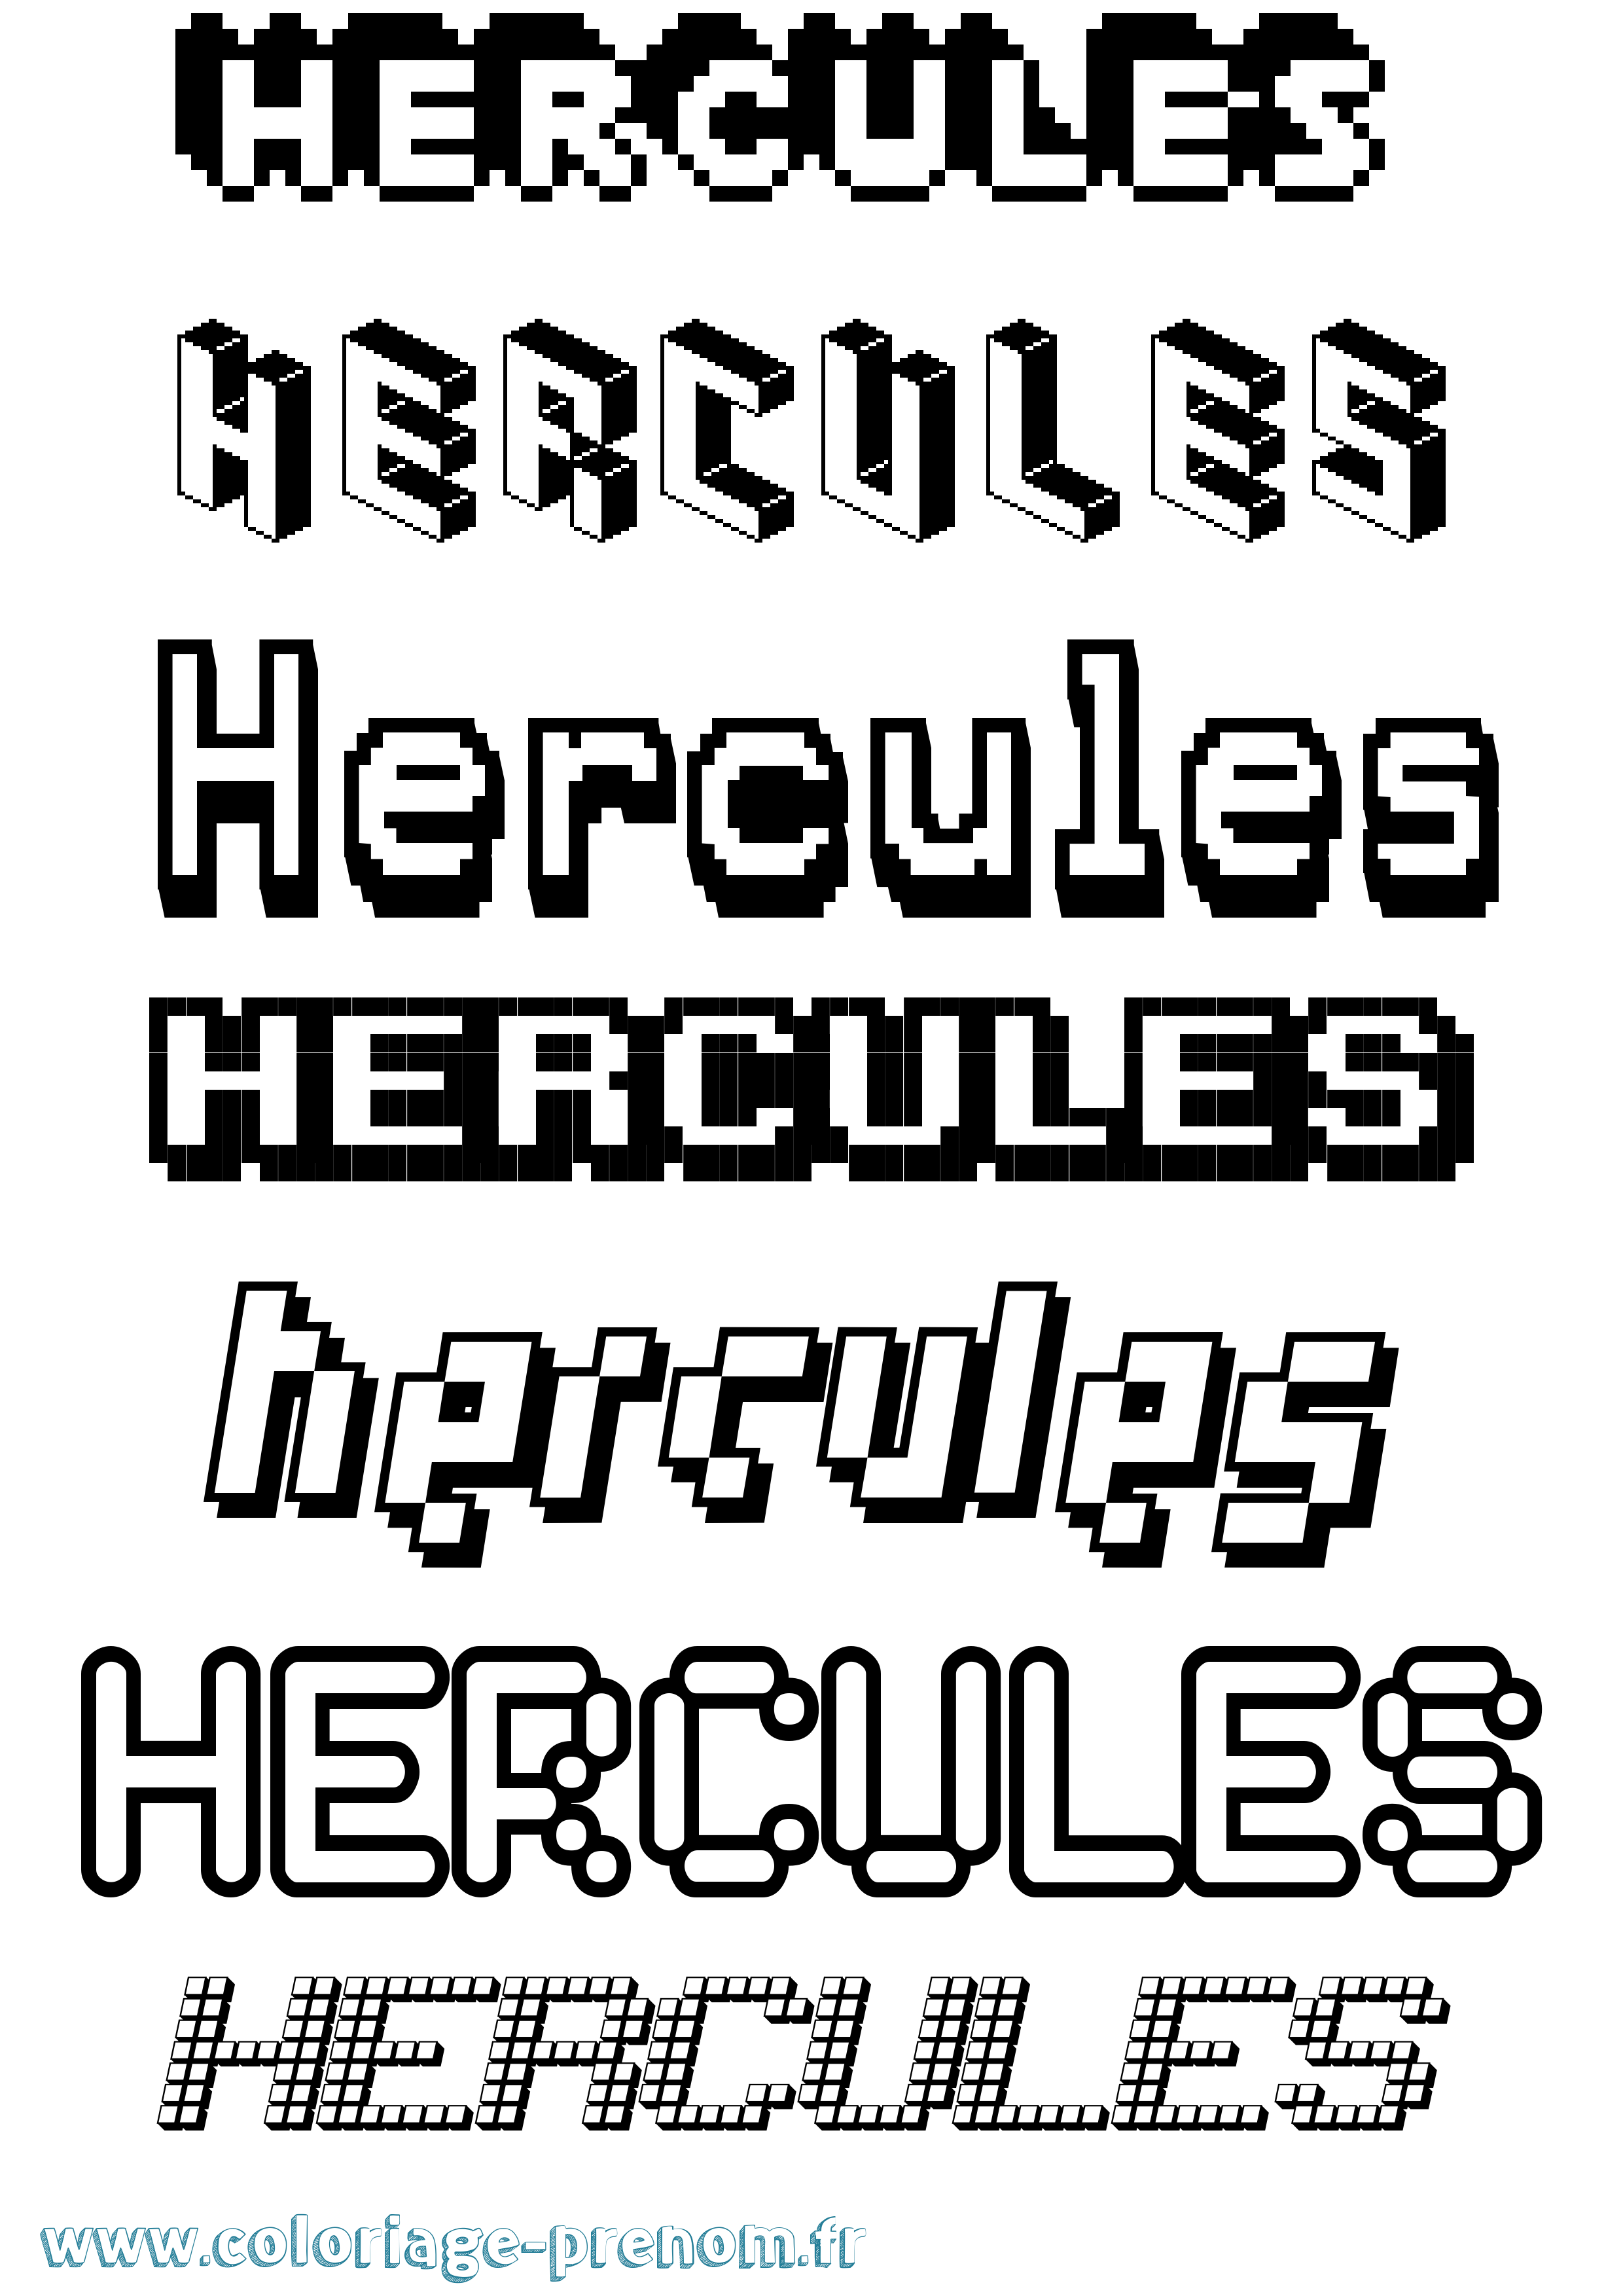 Coloriage prénom Hercules Pixel